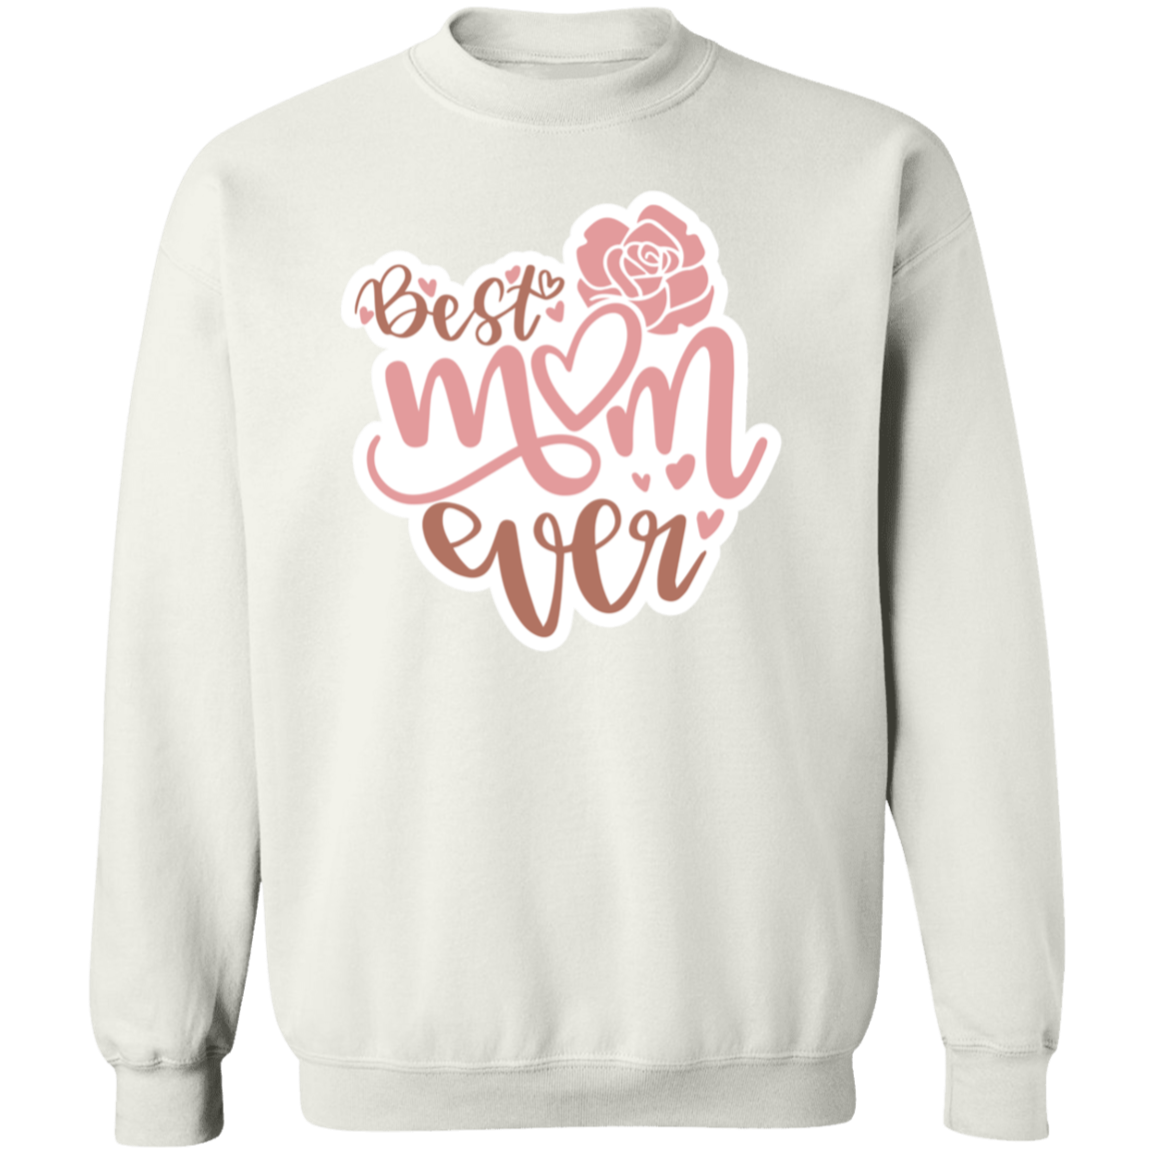 To Mom "Best Mom Ever" Pullover Sweatshirt